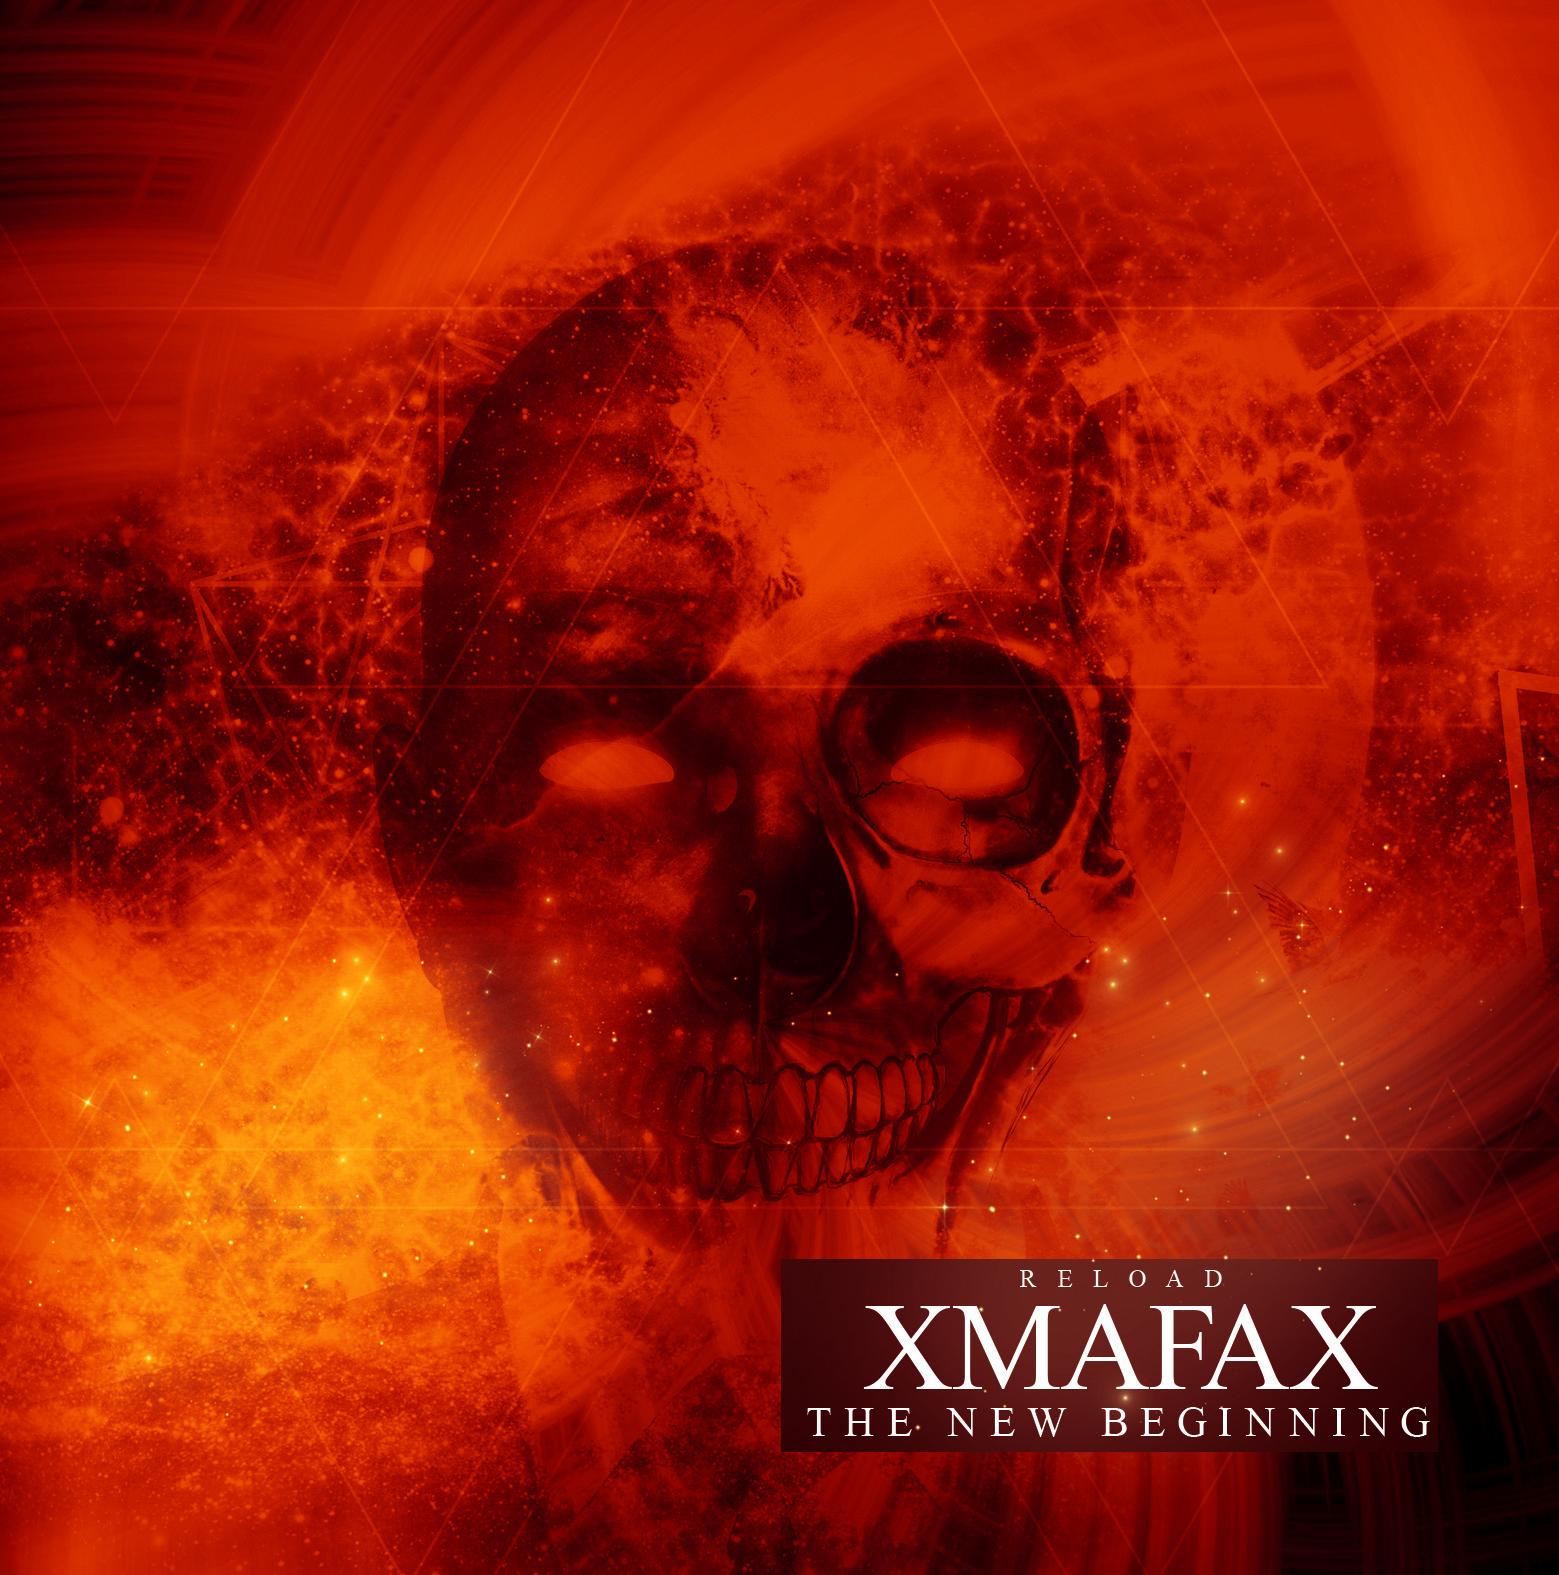 XmafaX - Diana "The New Beginning" - Reload